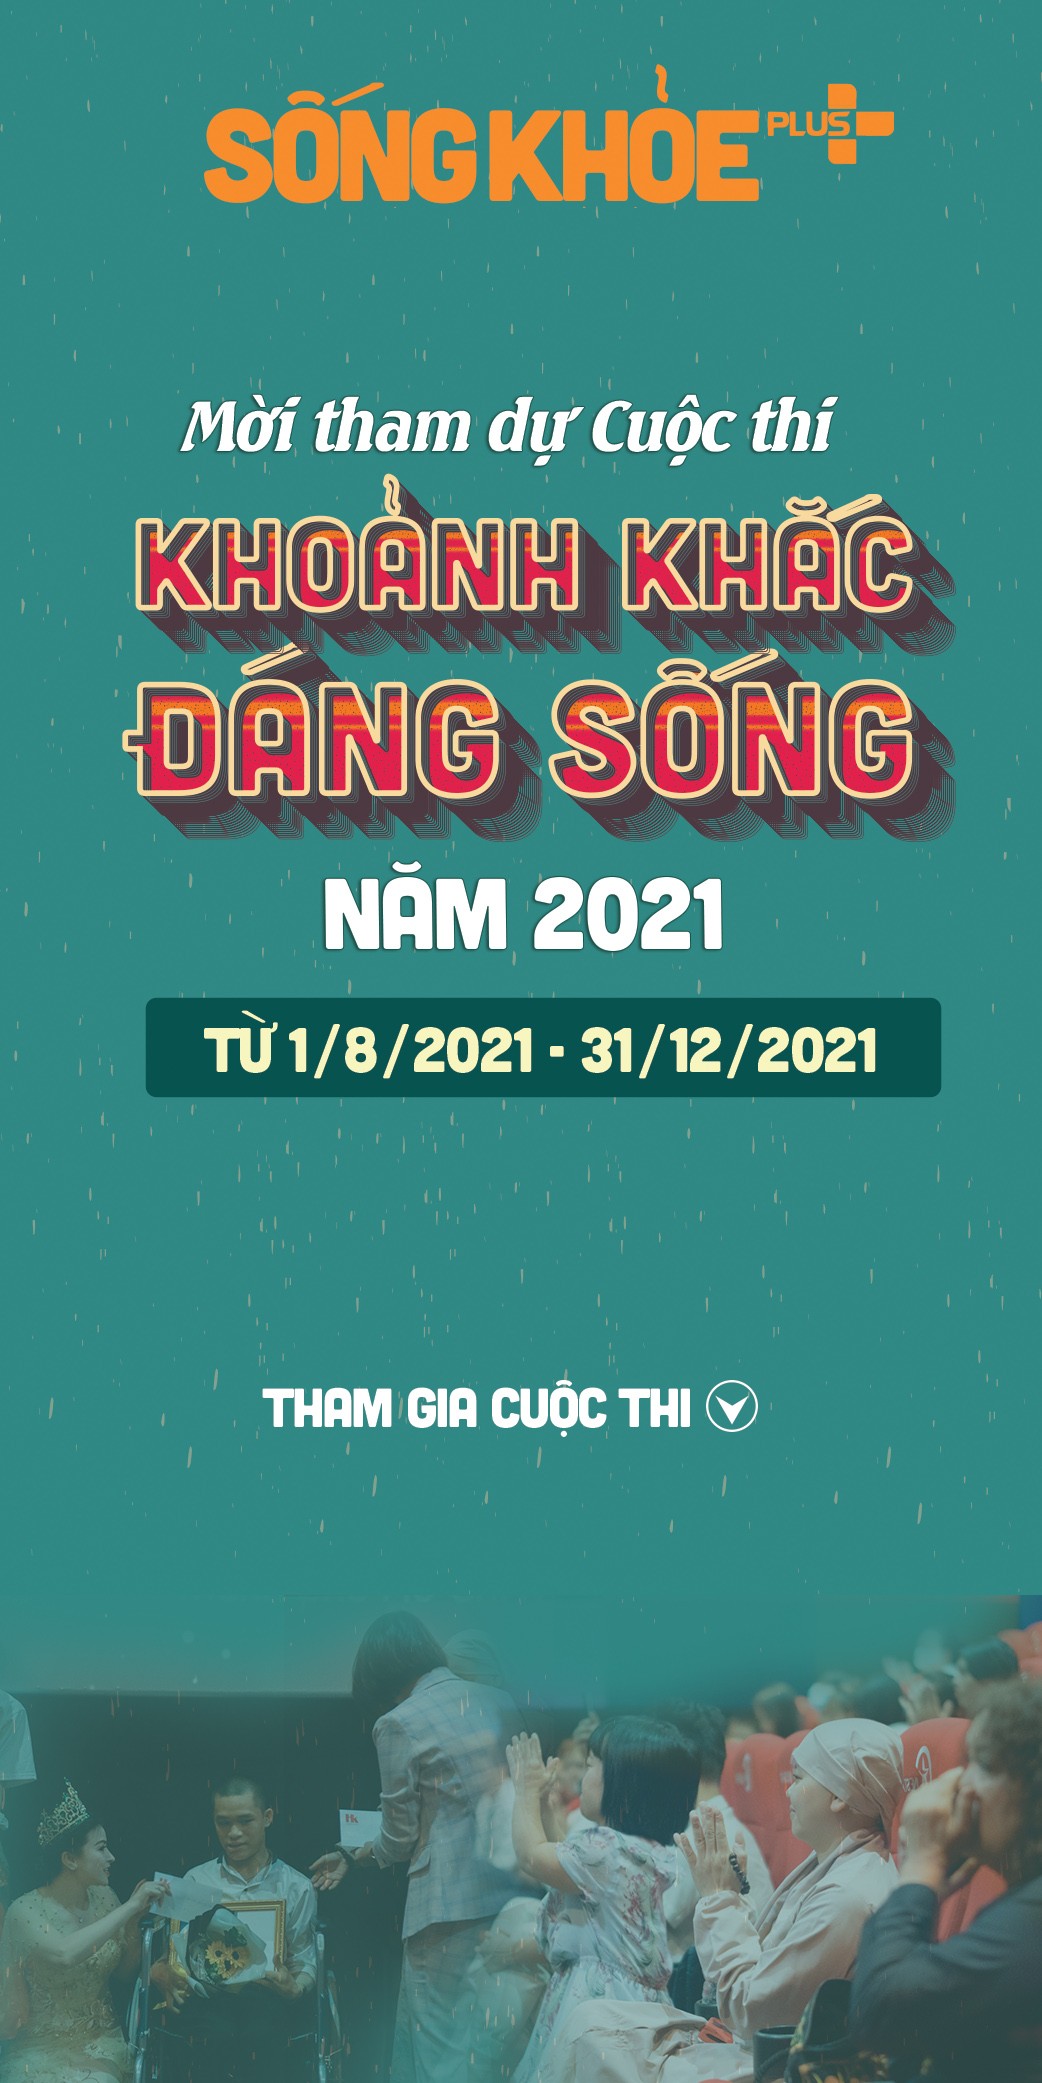 THE LE CUOC THI KHOANH KHAC DANG SONG NAM 2021